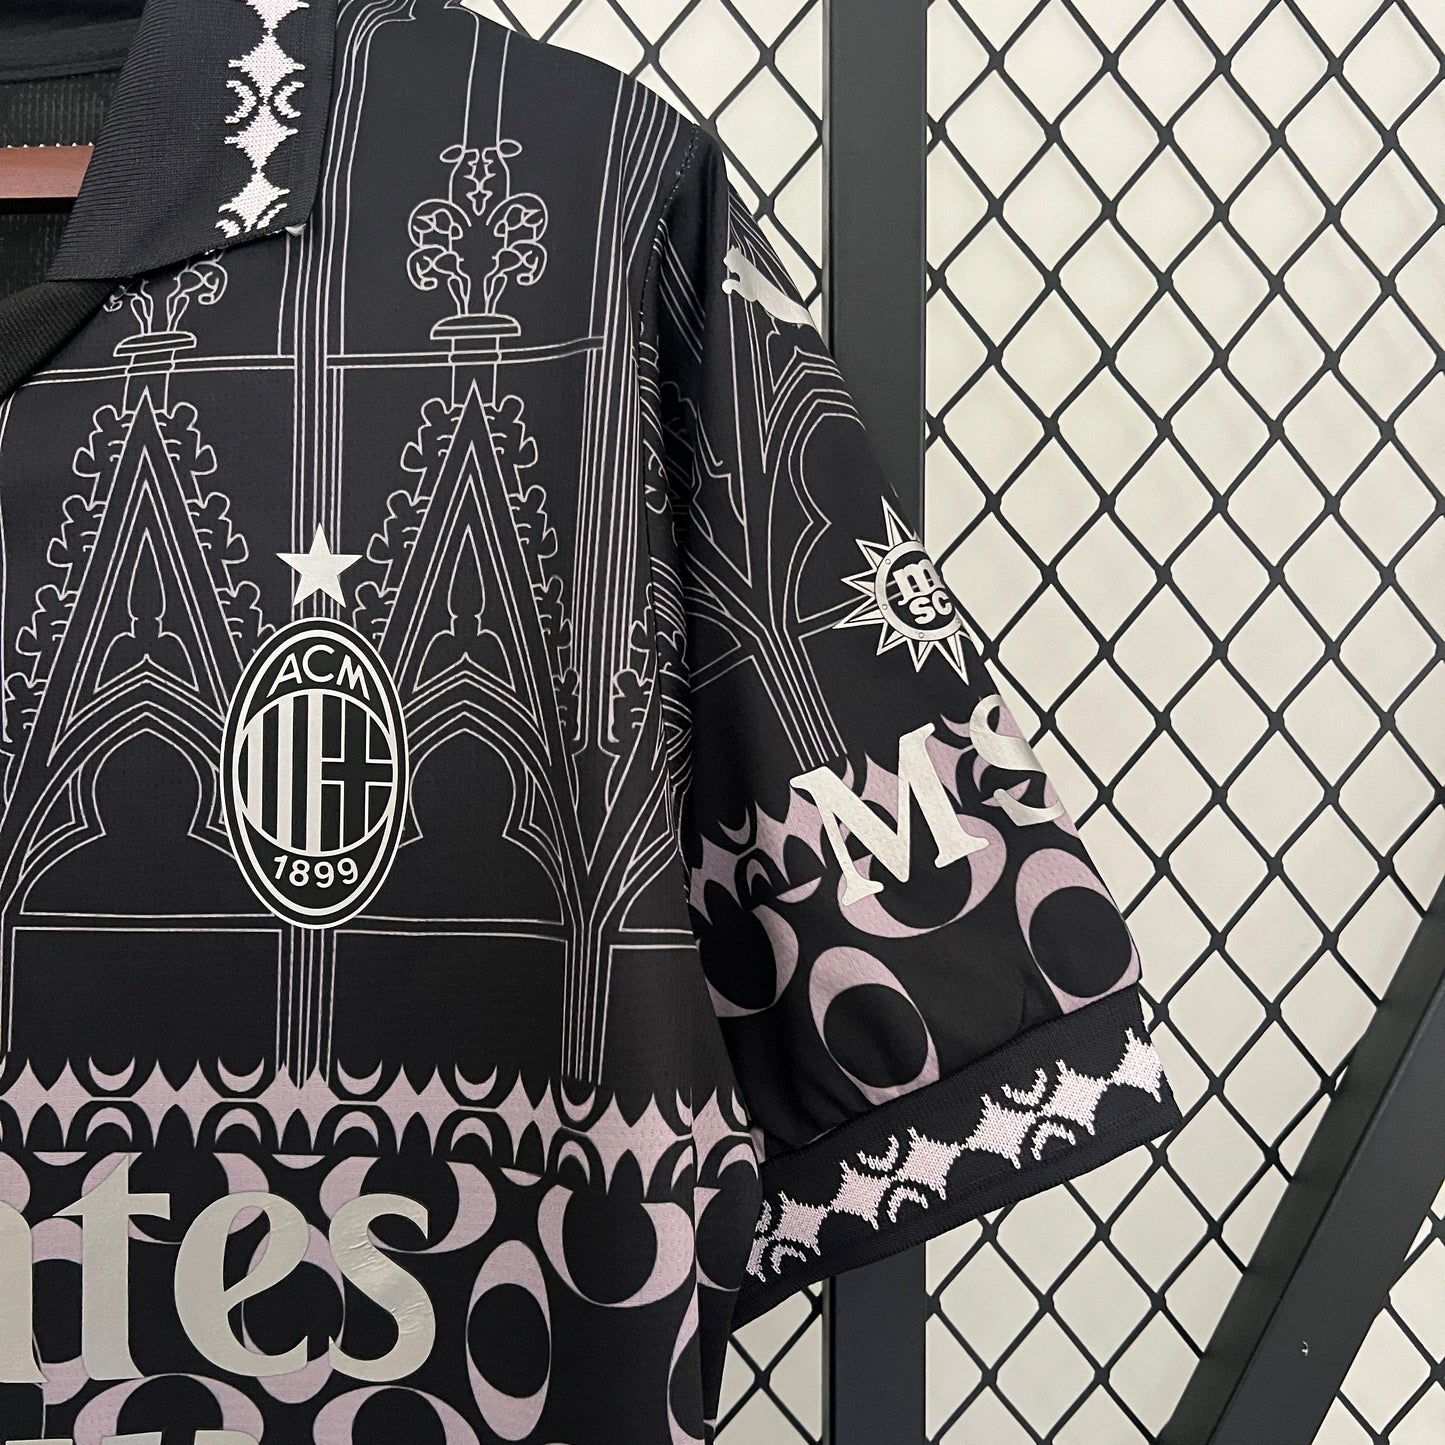 AC Milan x PLEASURES 23/24 Shirt Kit